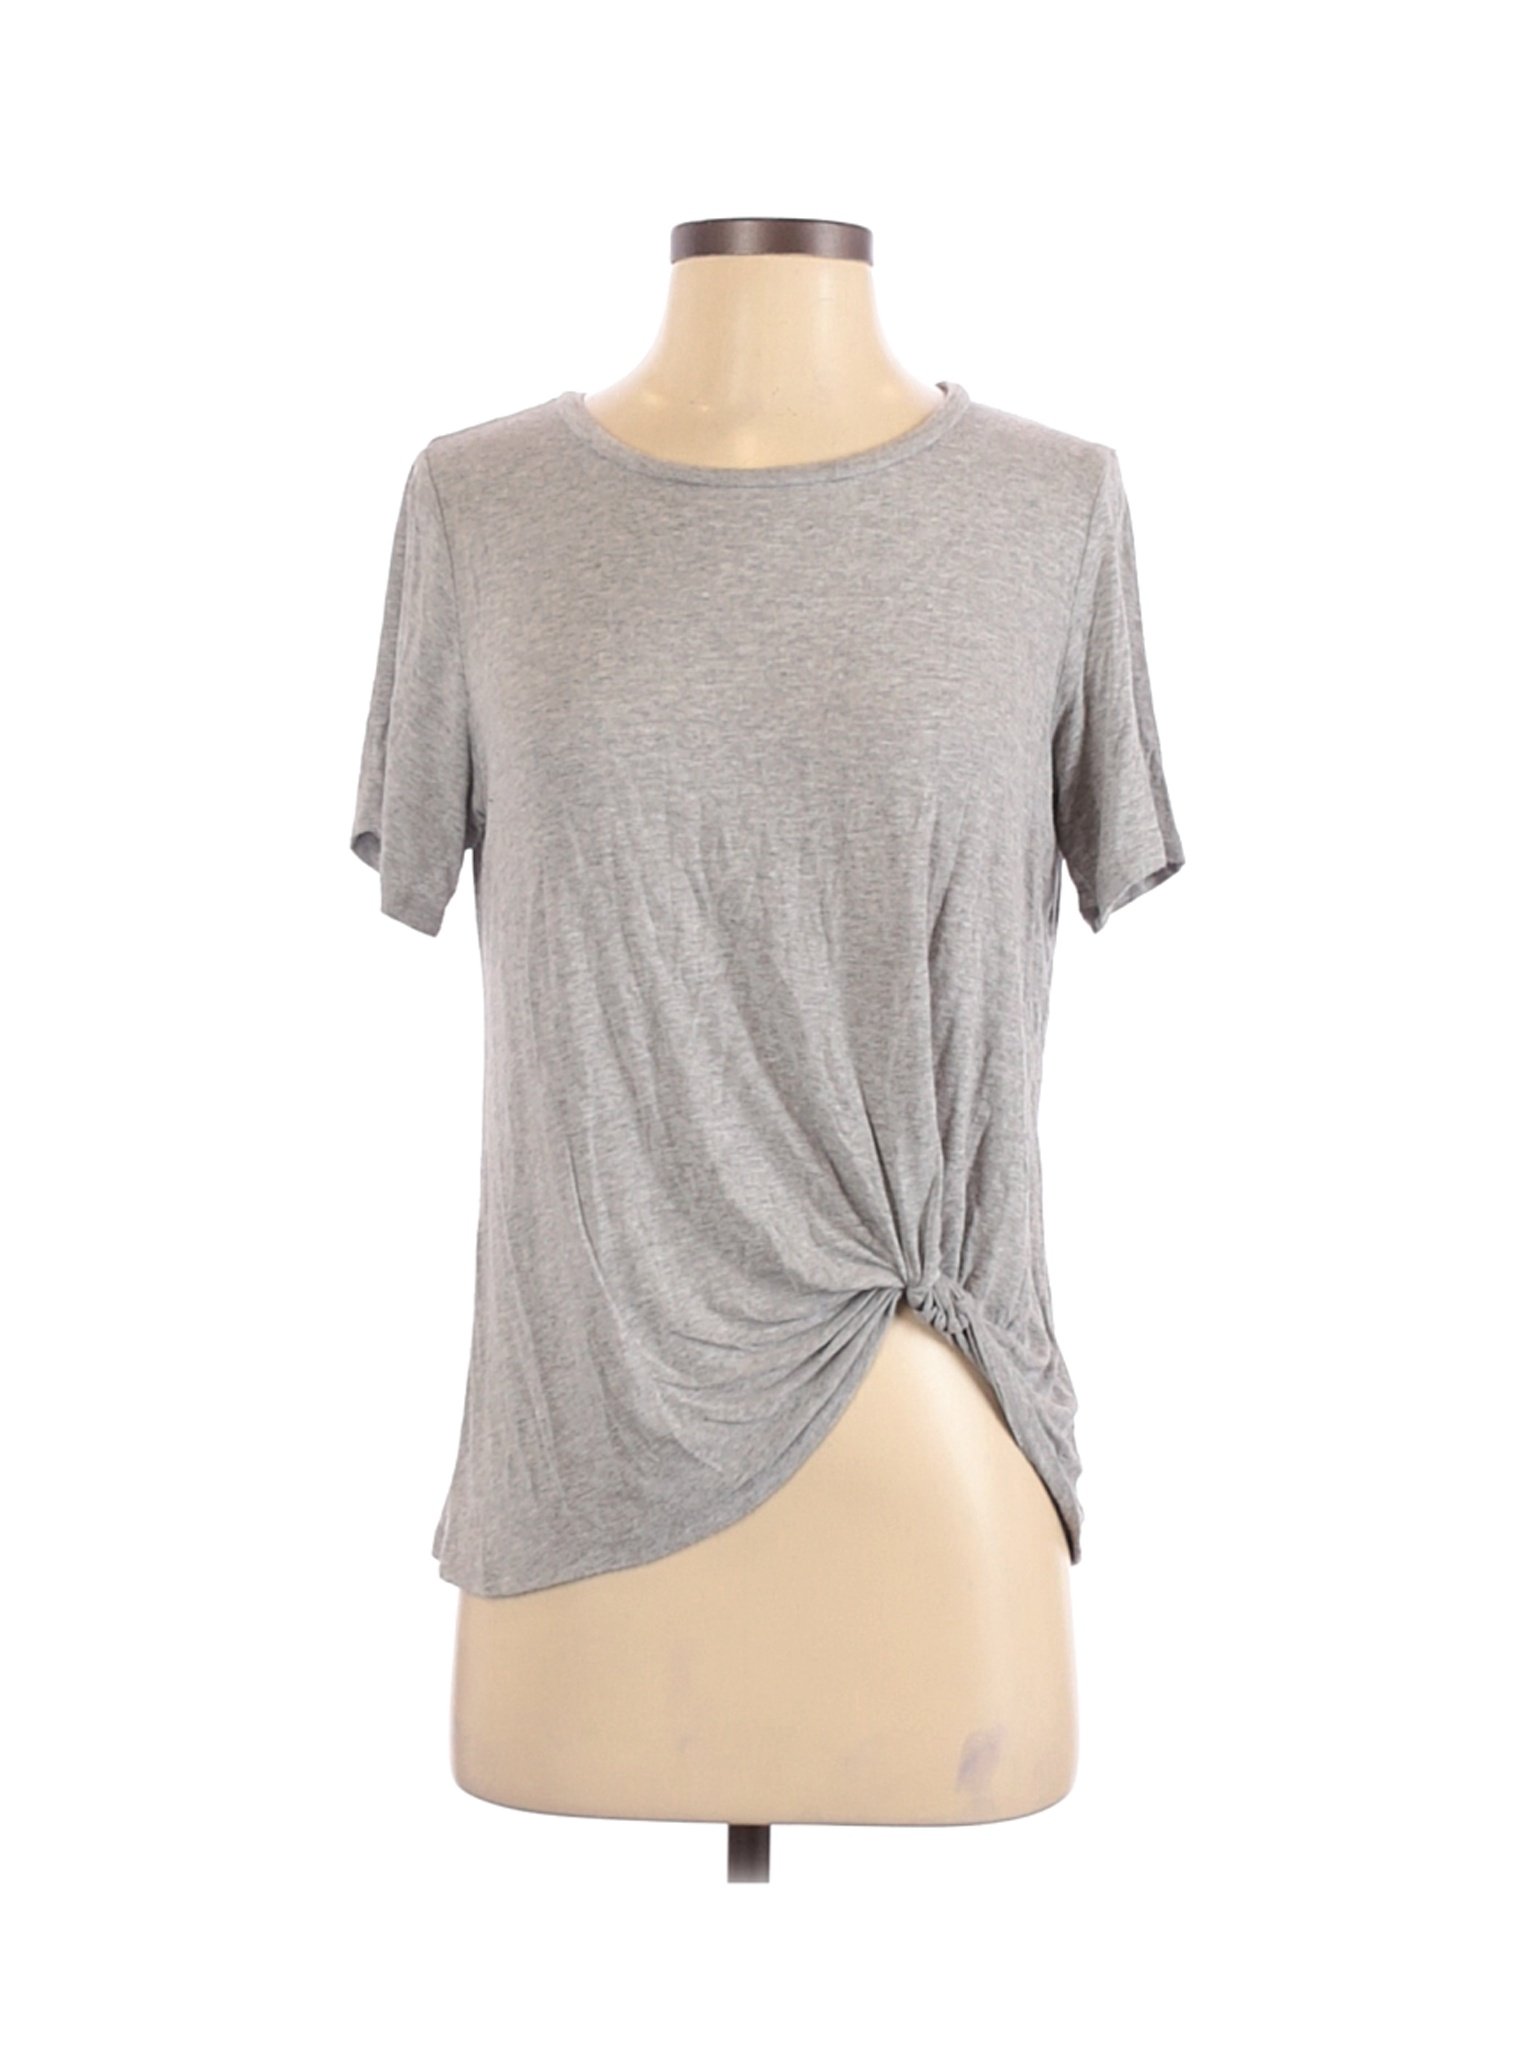 Mustard Seed Women Gray Short Sleeve T-Shirt S | eBay